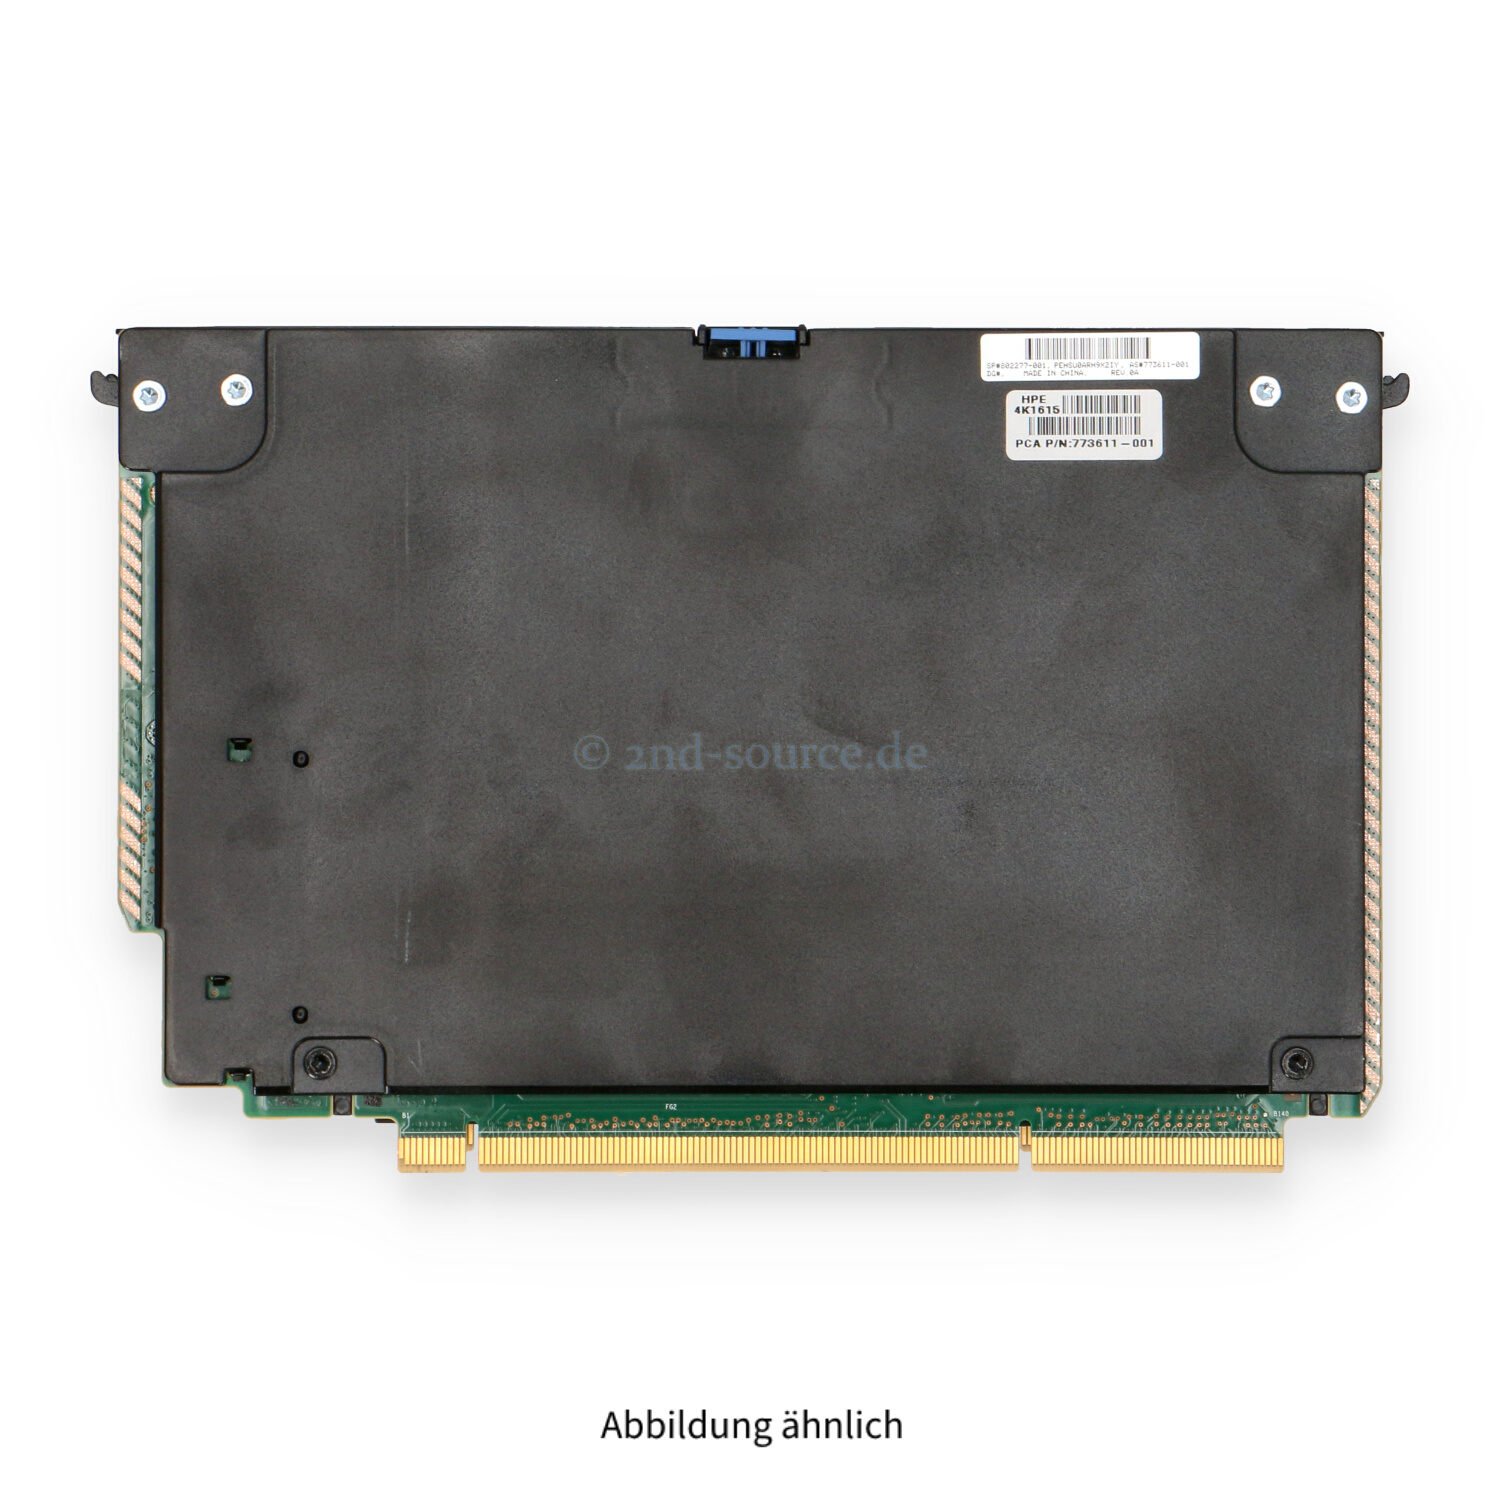 HPE Memory Cartridge ProLiant DL580 G9 788360-B21 802277-001